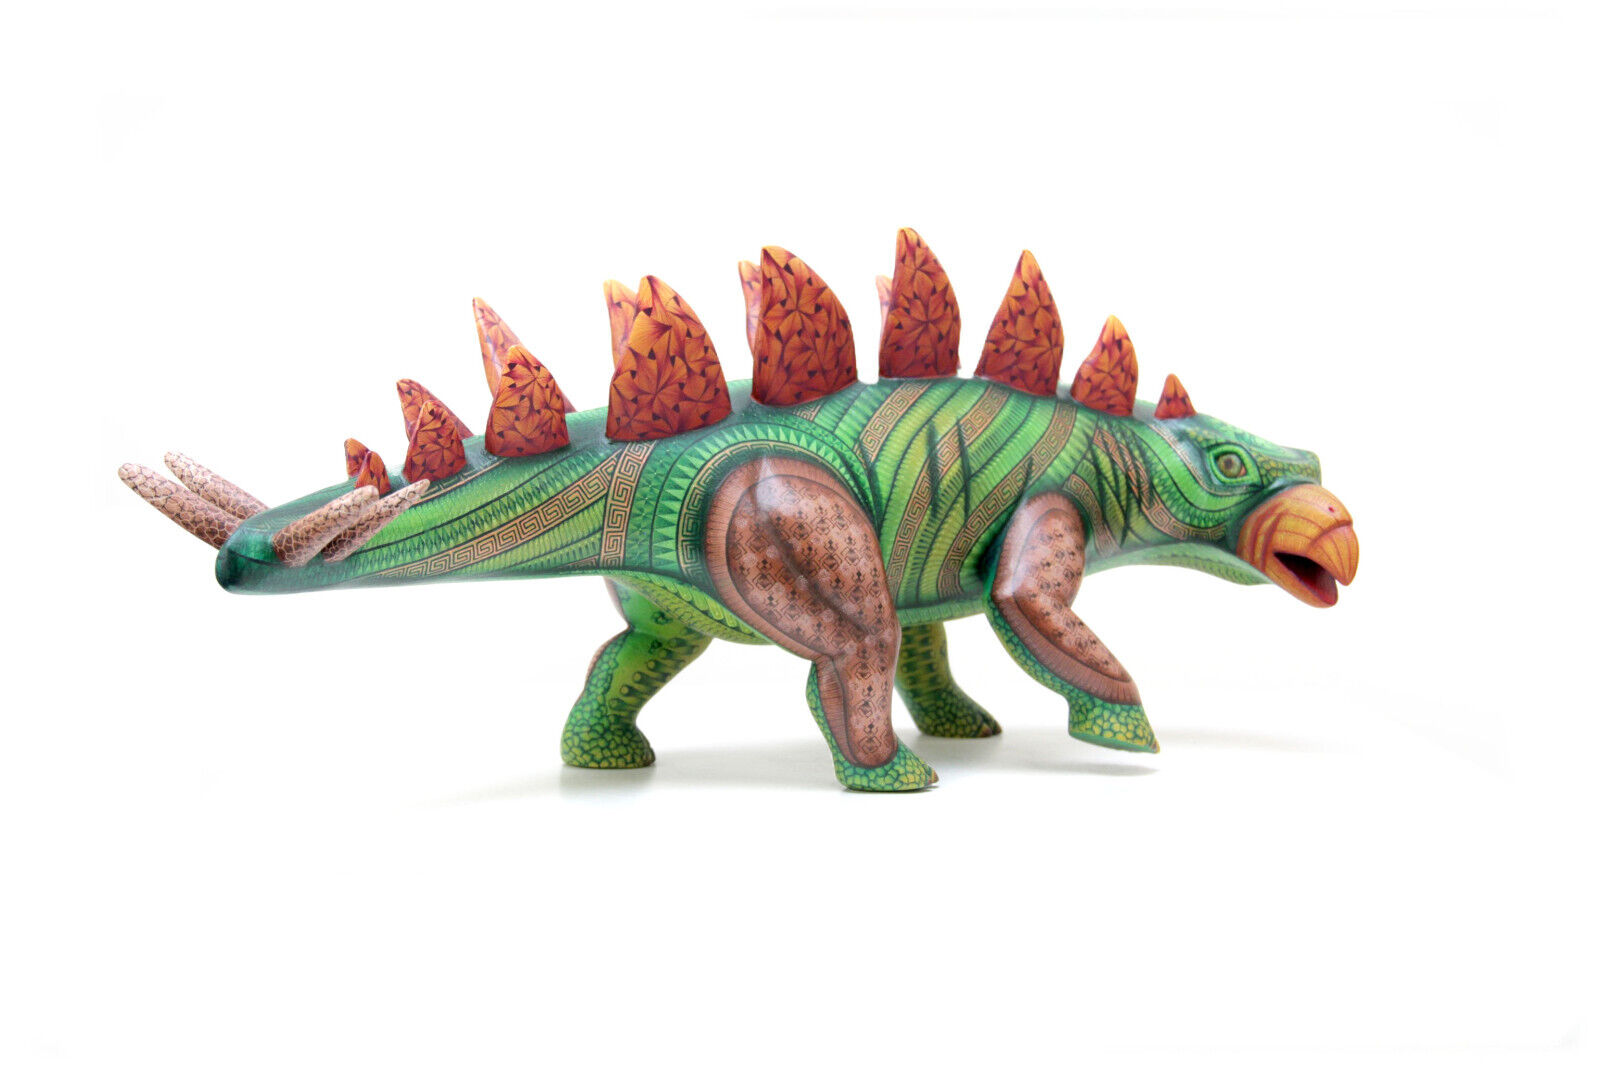 Oaxaca Alebrije Stegosaurus 20.7 in. | Wood carving mexican artwork dinosaur